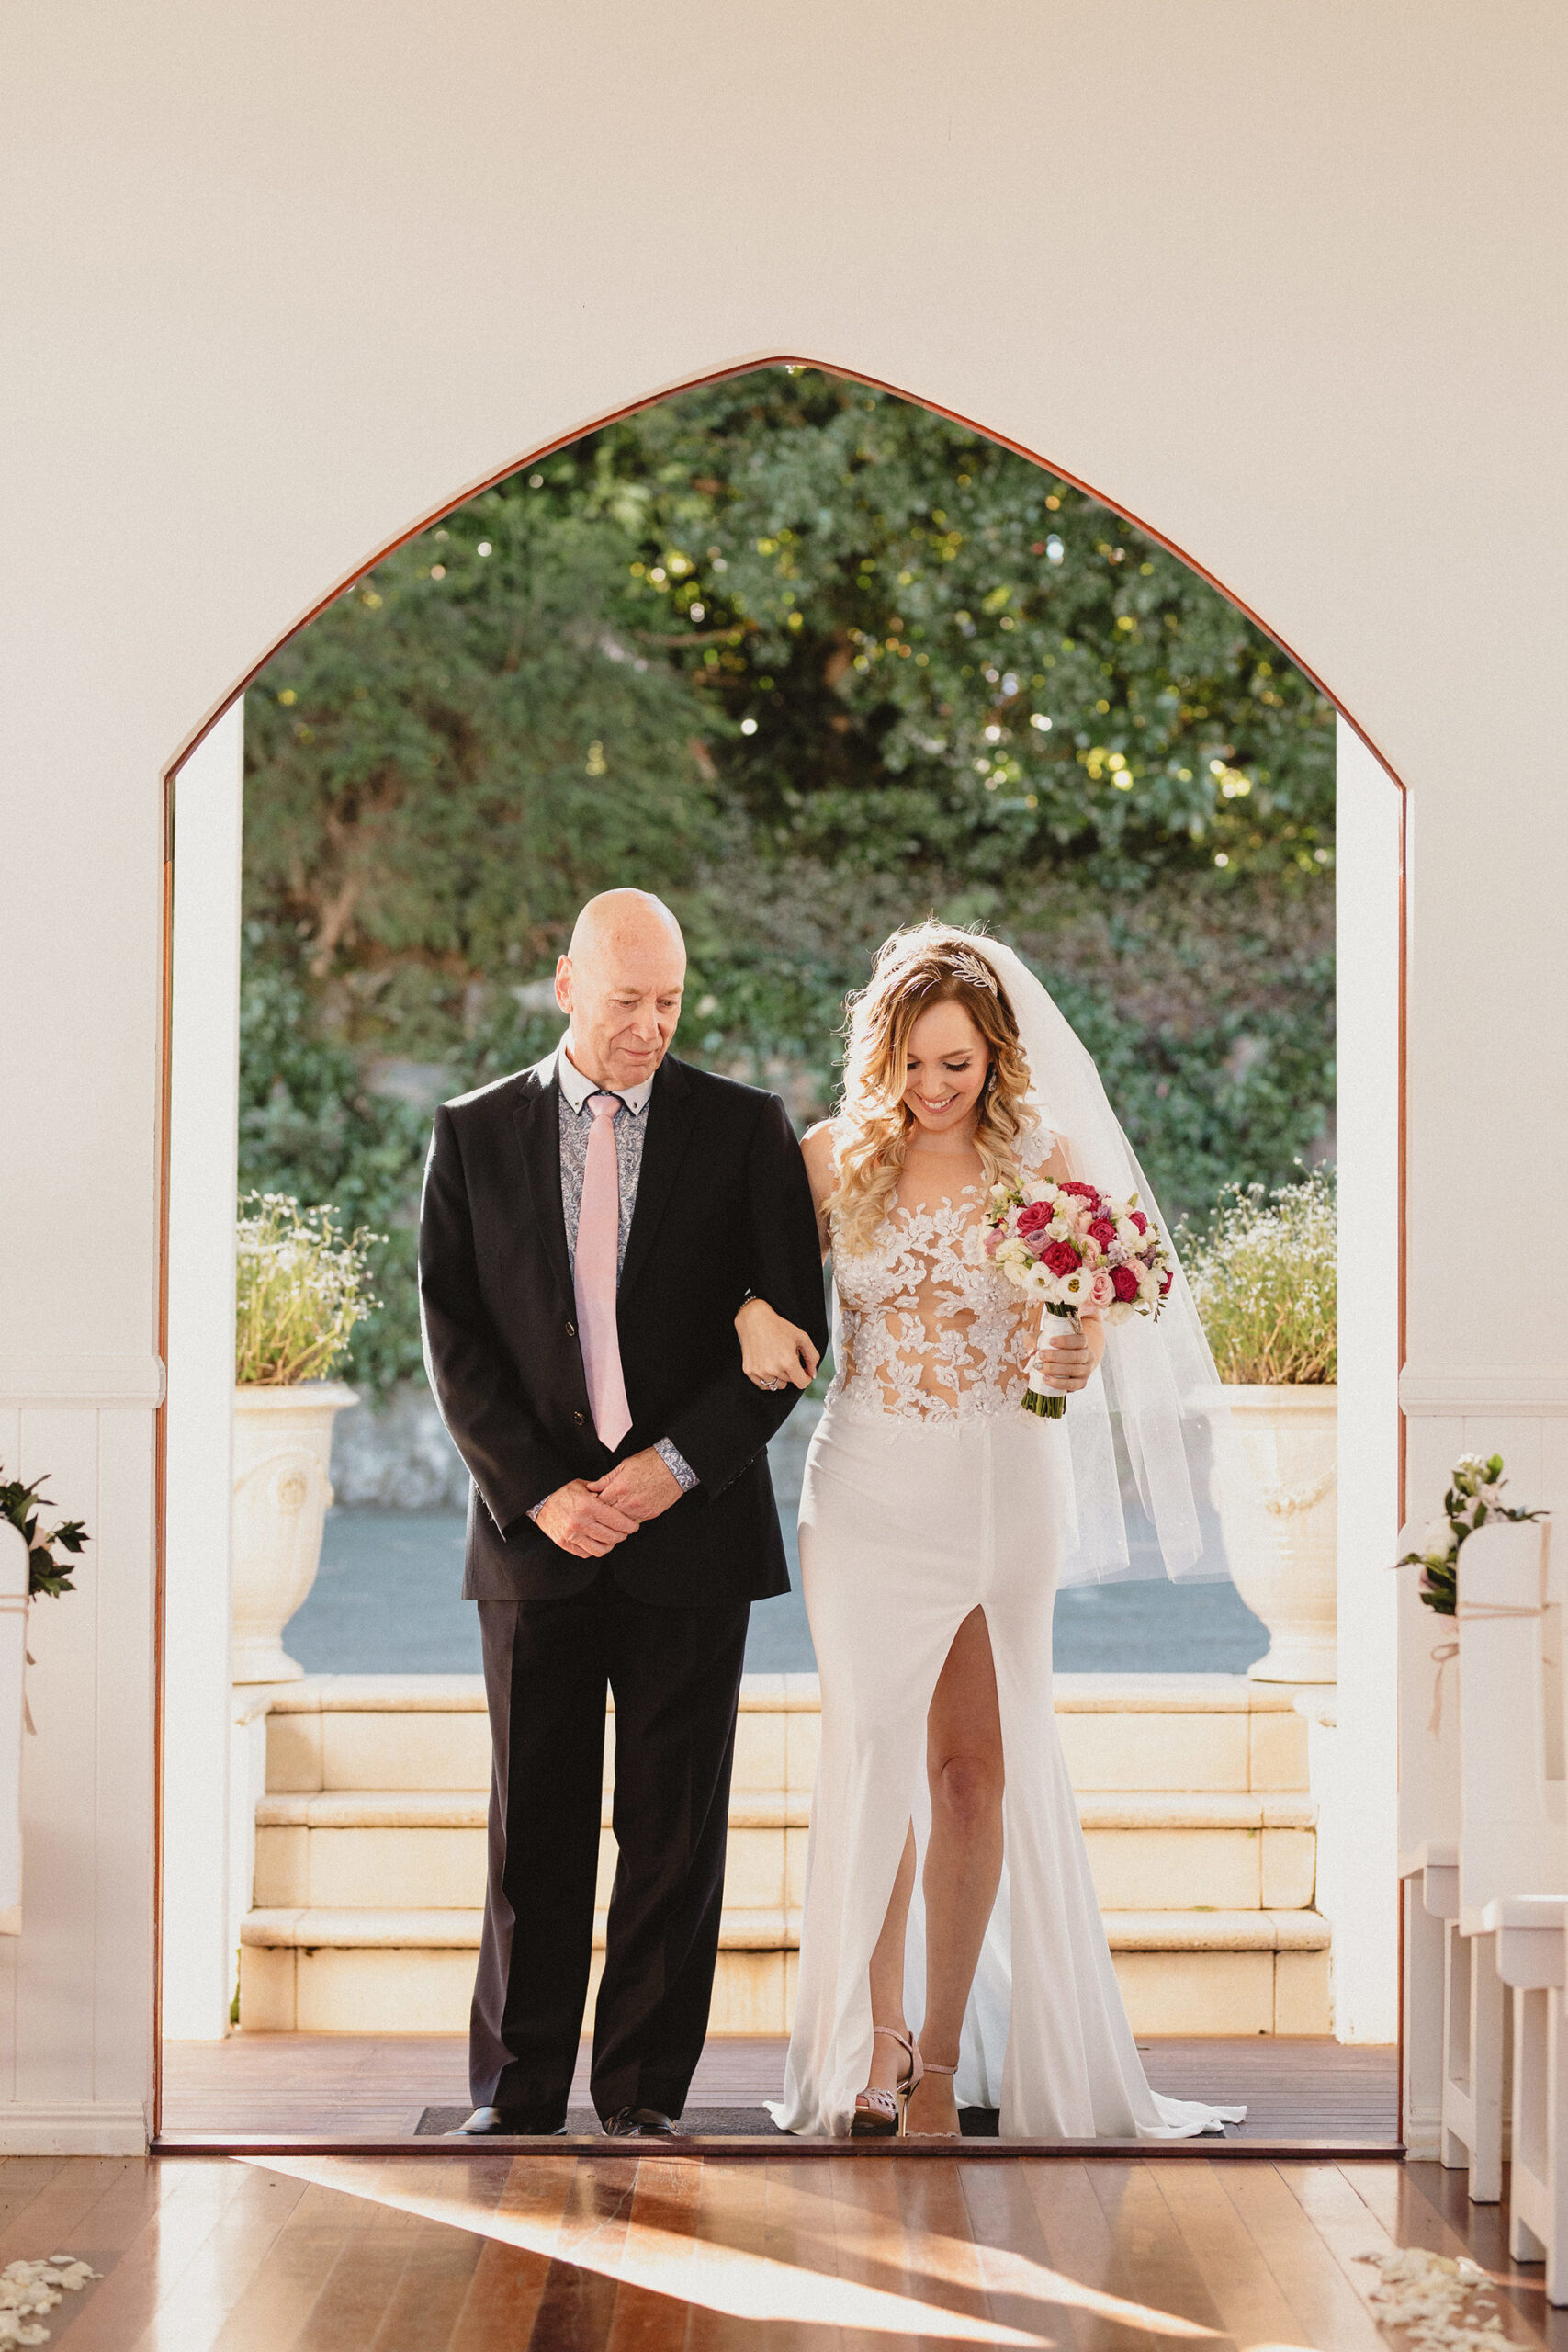 Kate_Nick_Simple-Elegant-Wedding_Luke-Middlemiss-Photography_SBS_013